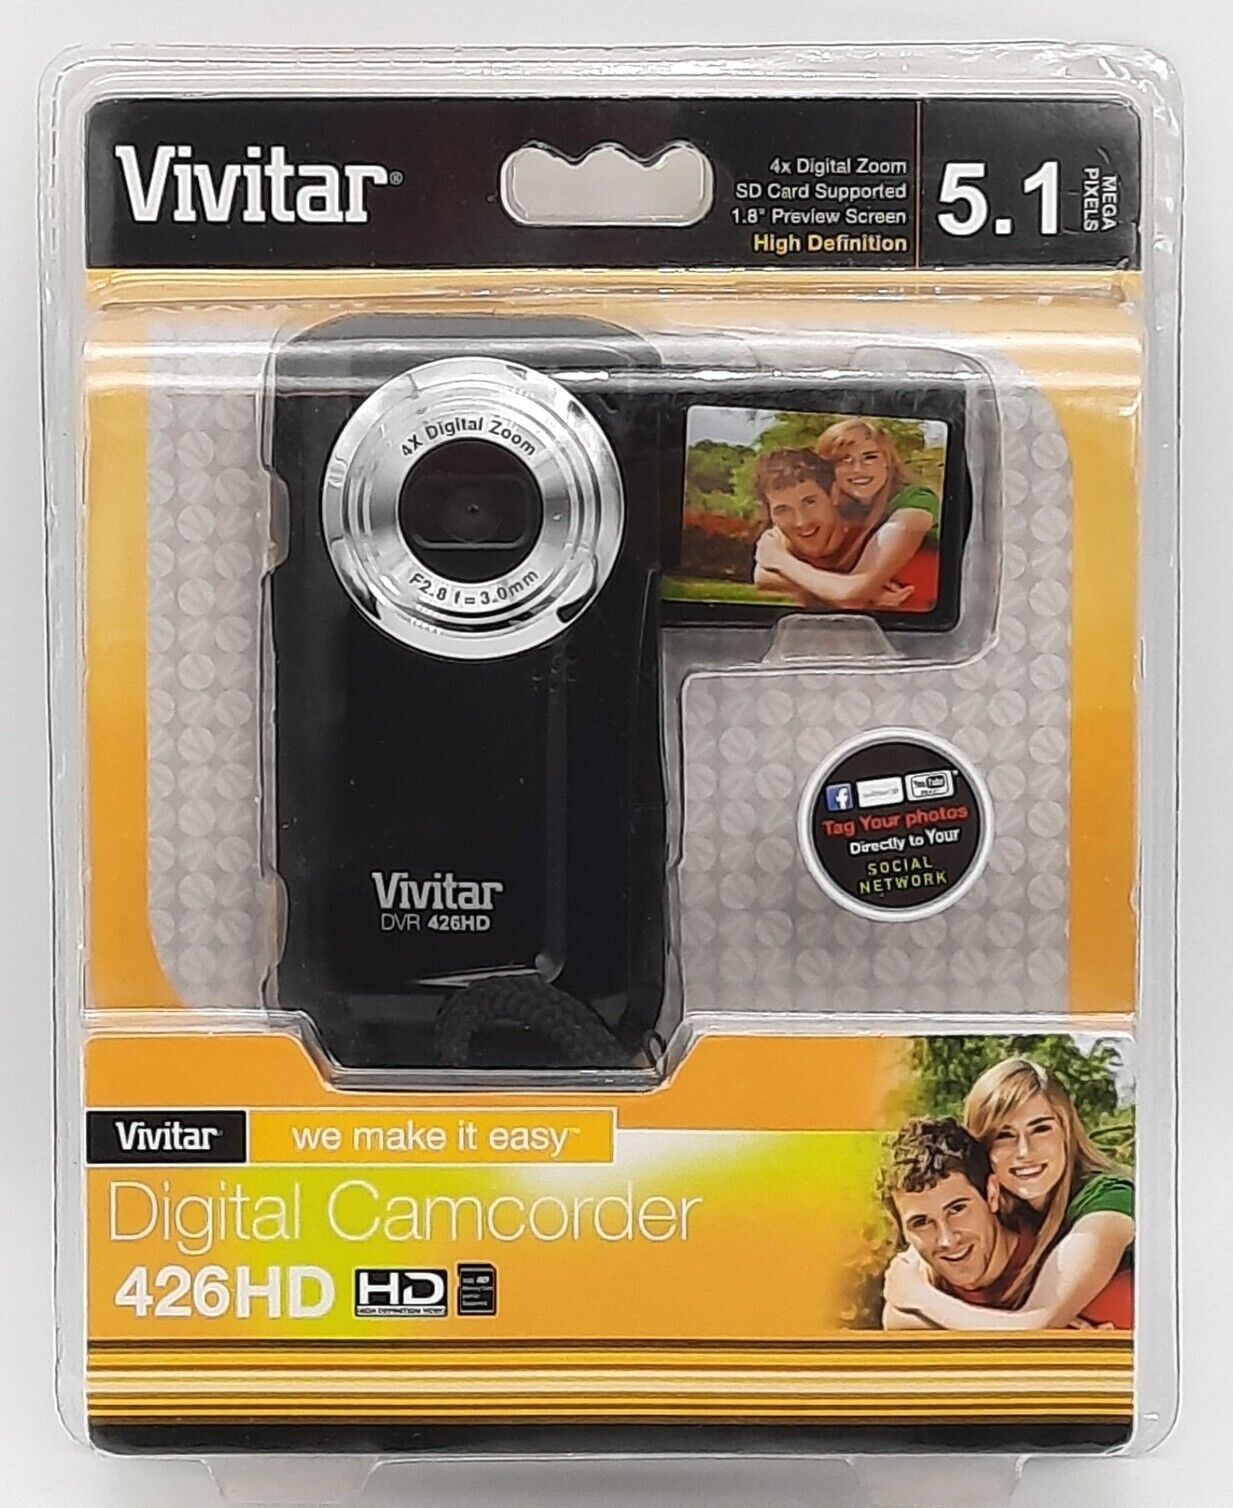 Vivitar DVR 426HD Handheld Digital Camcorder with Camera  Black  